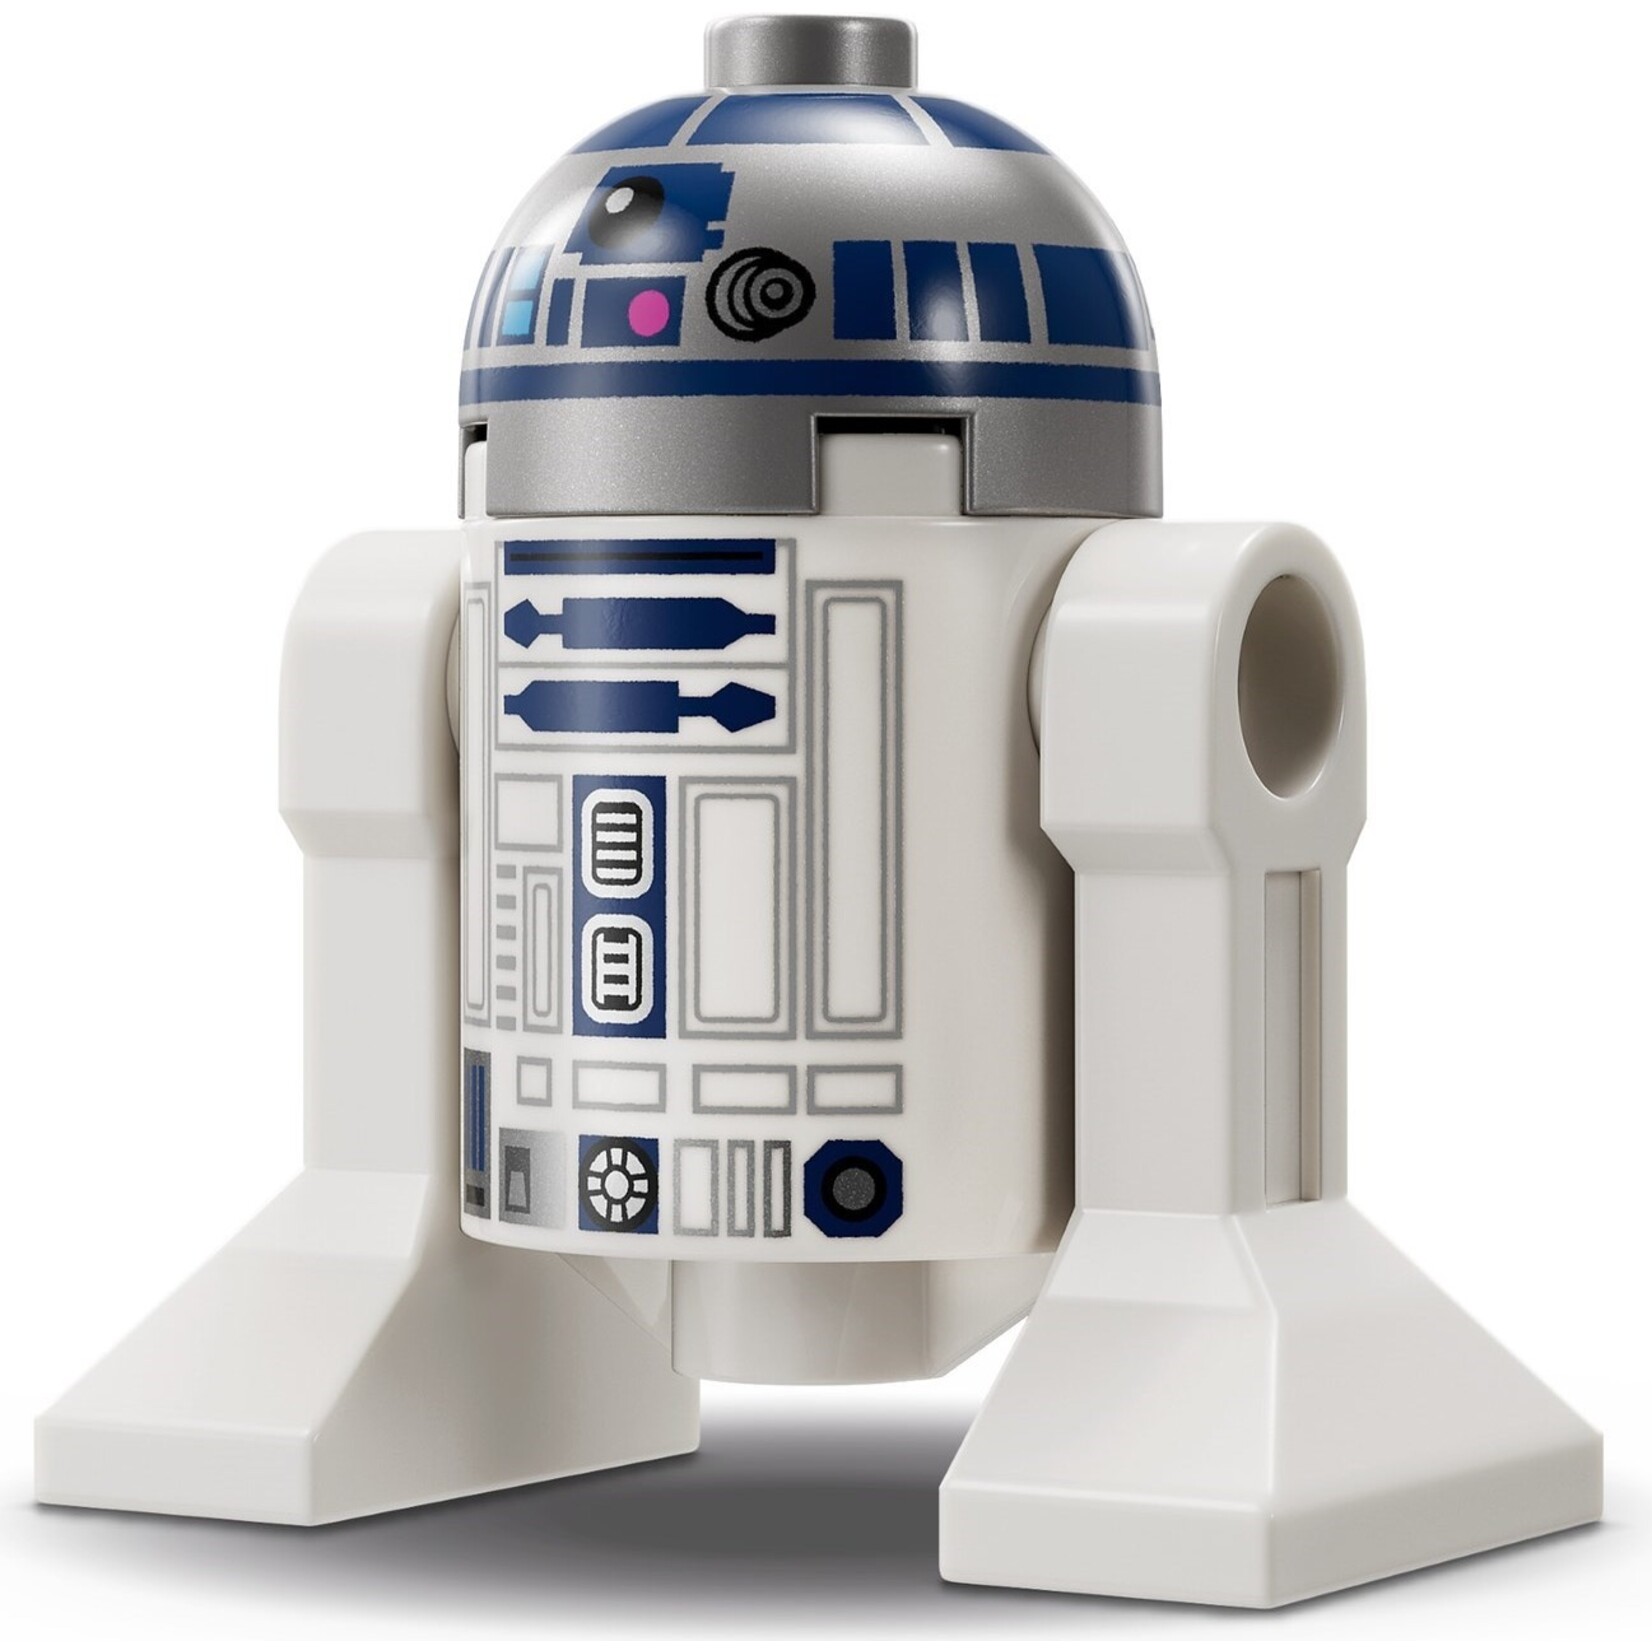 LEGO R2-D2 - 75379